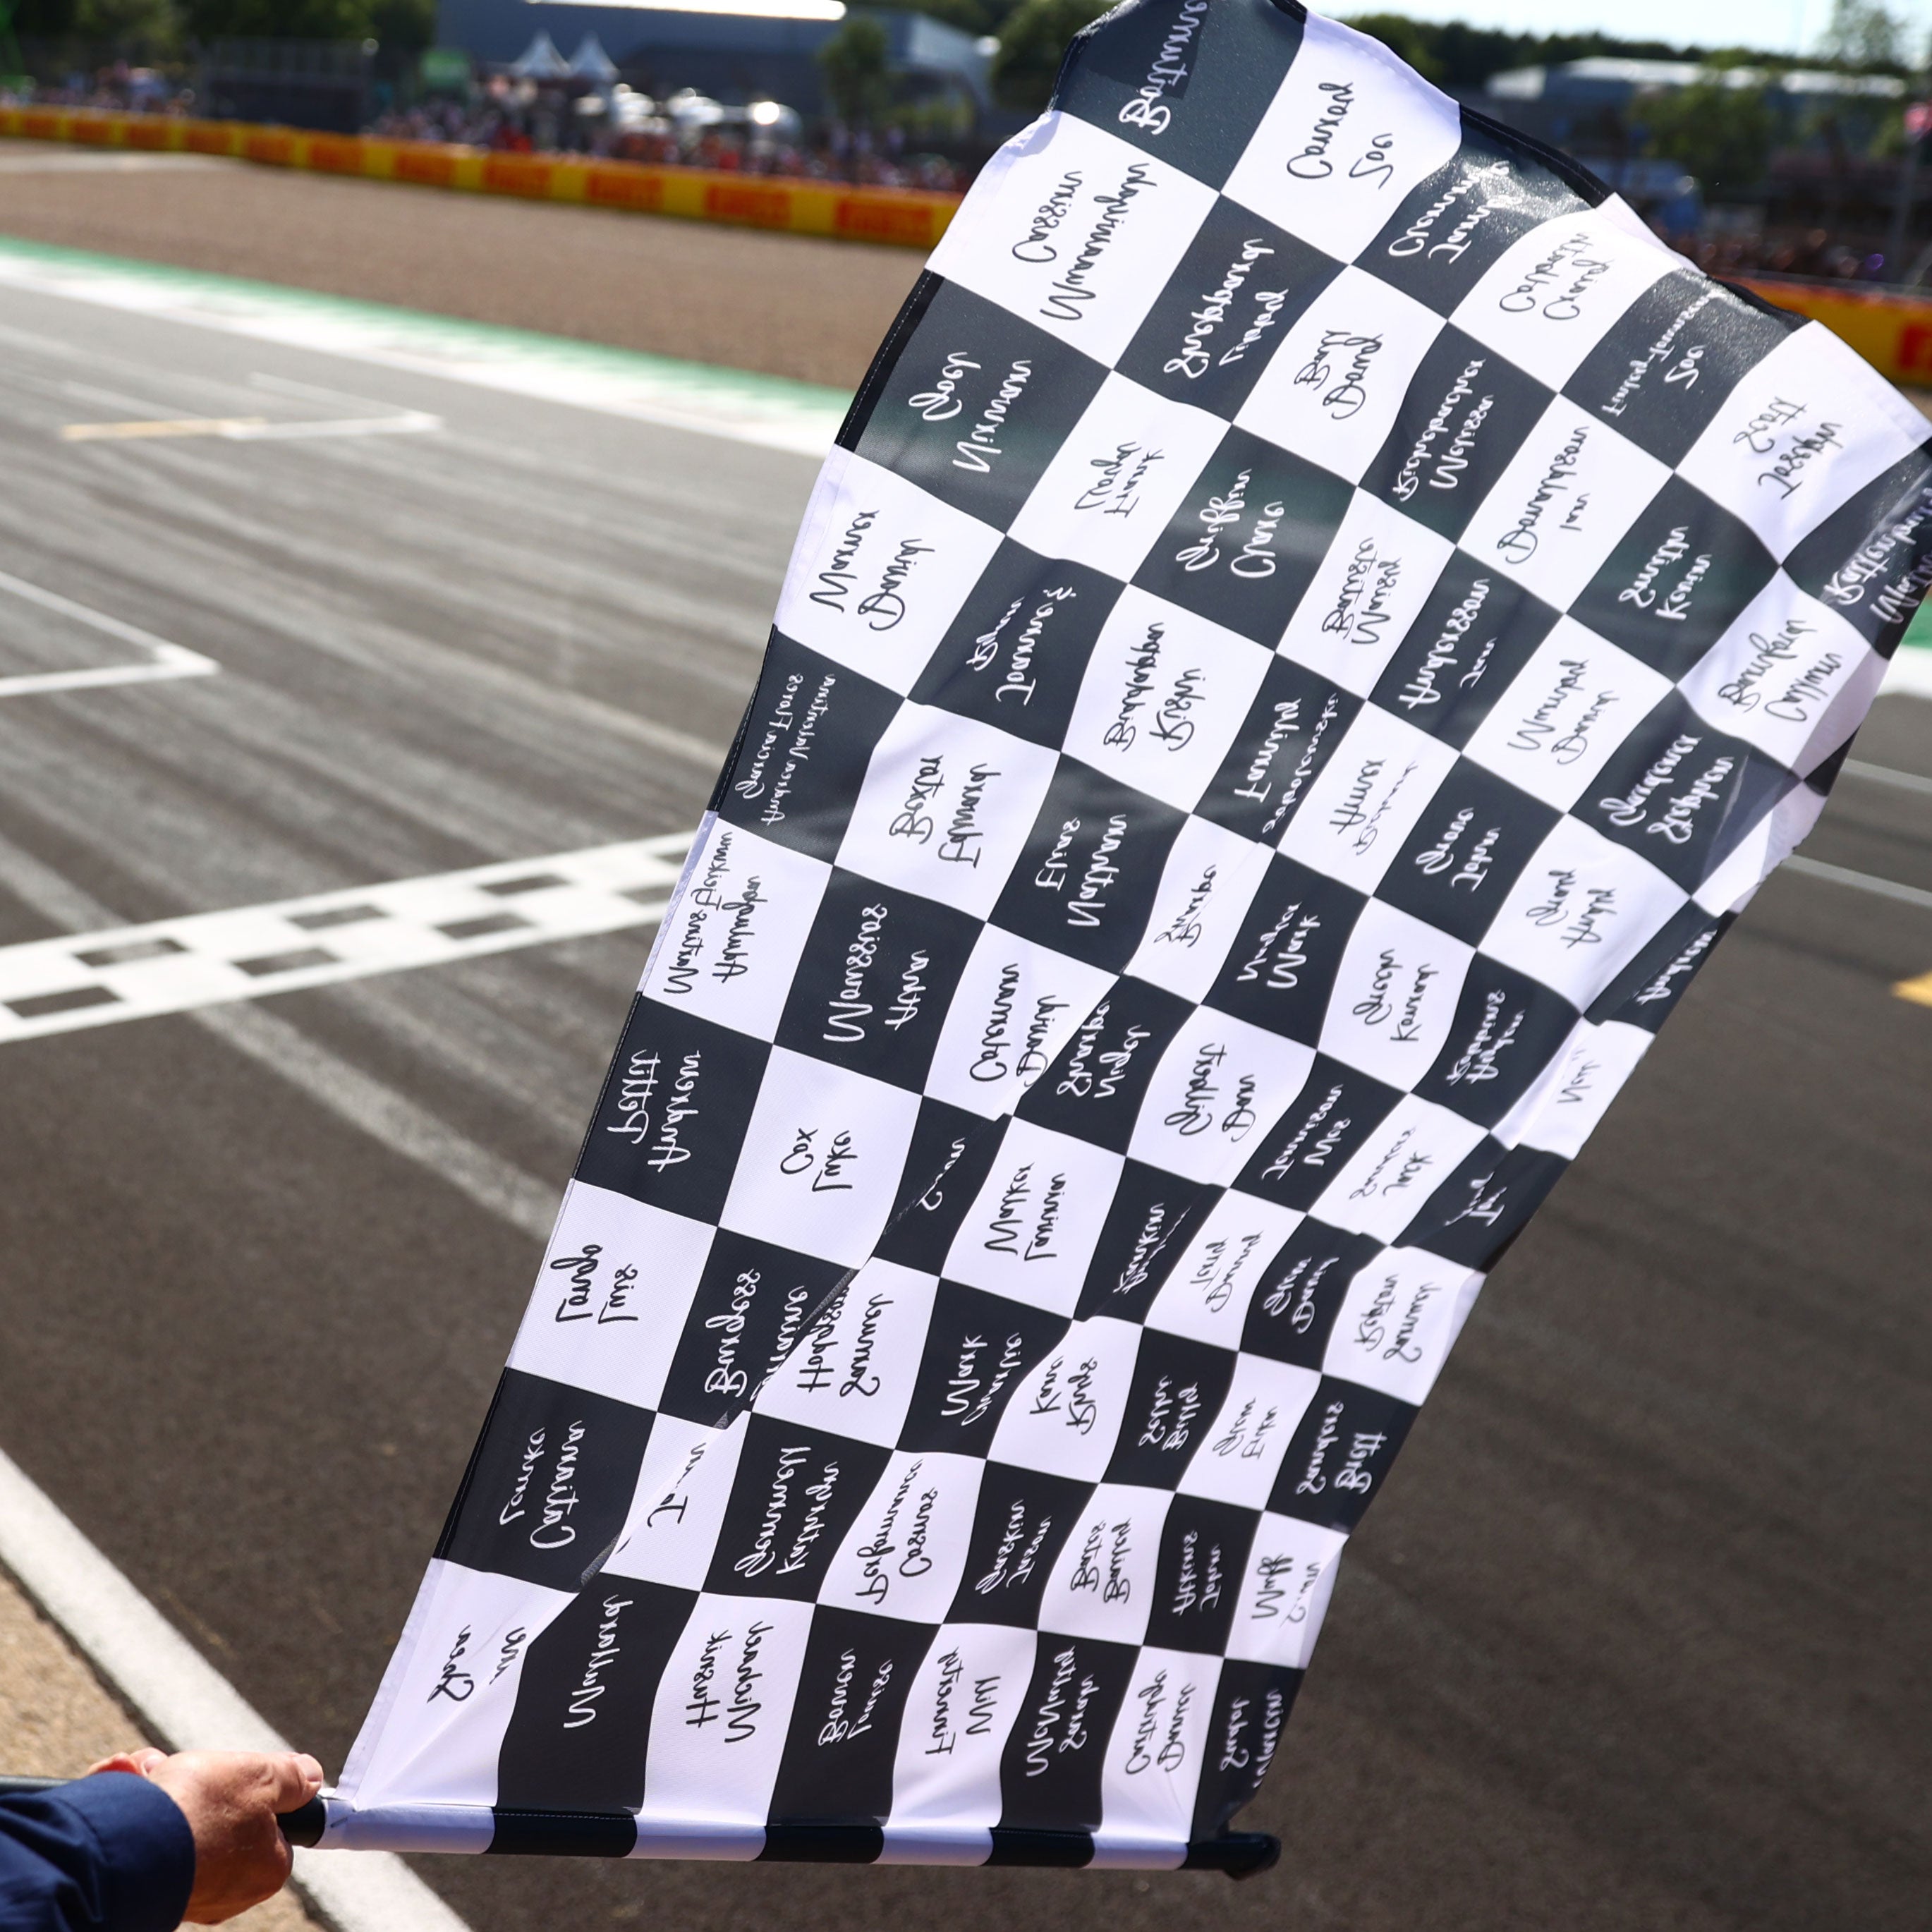 Enea Bastianini Signed 2023 MotoGP Chequered Flag Square - Valencia GP